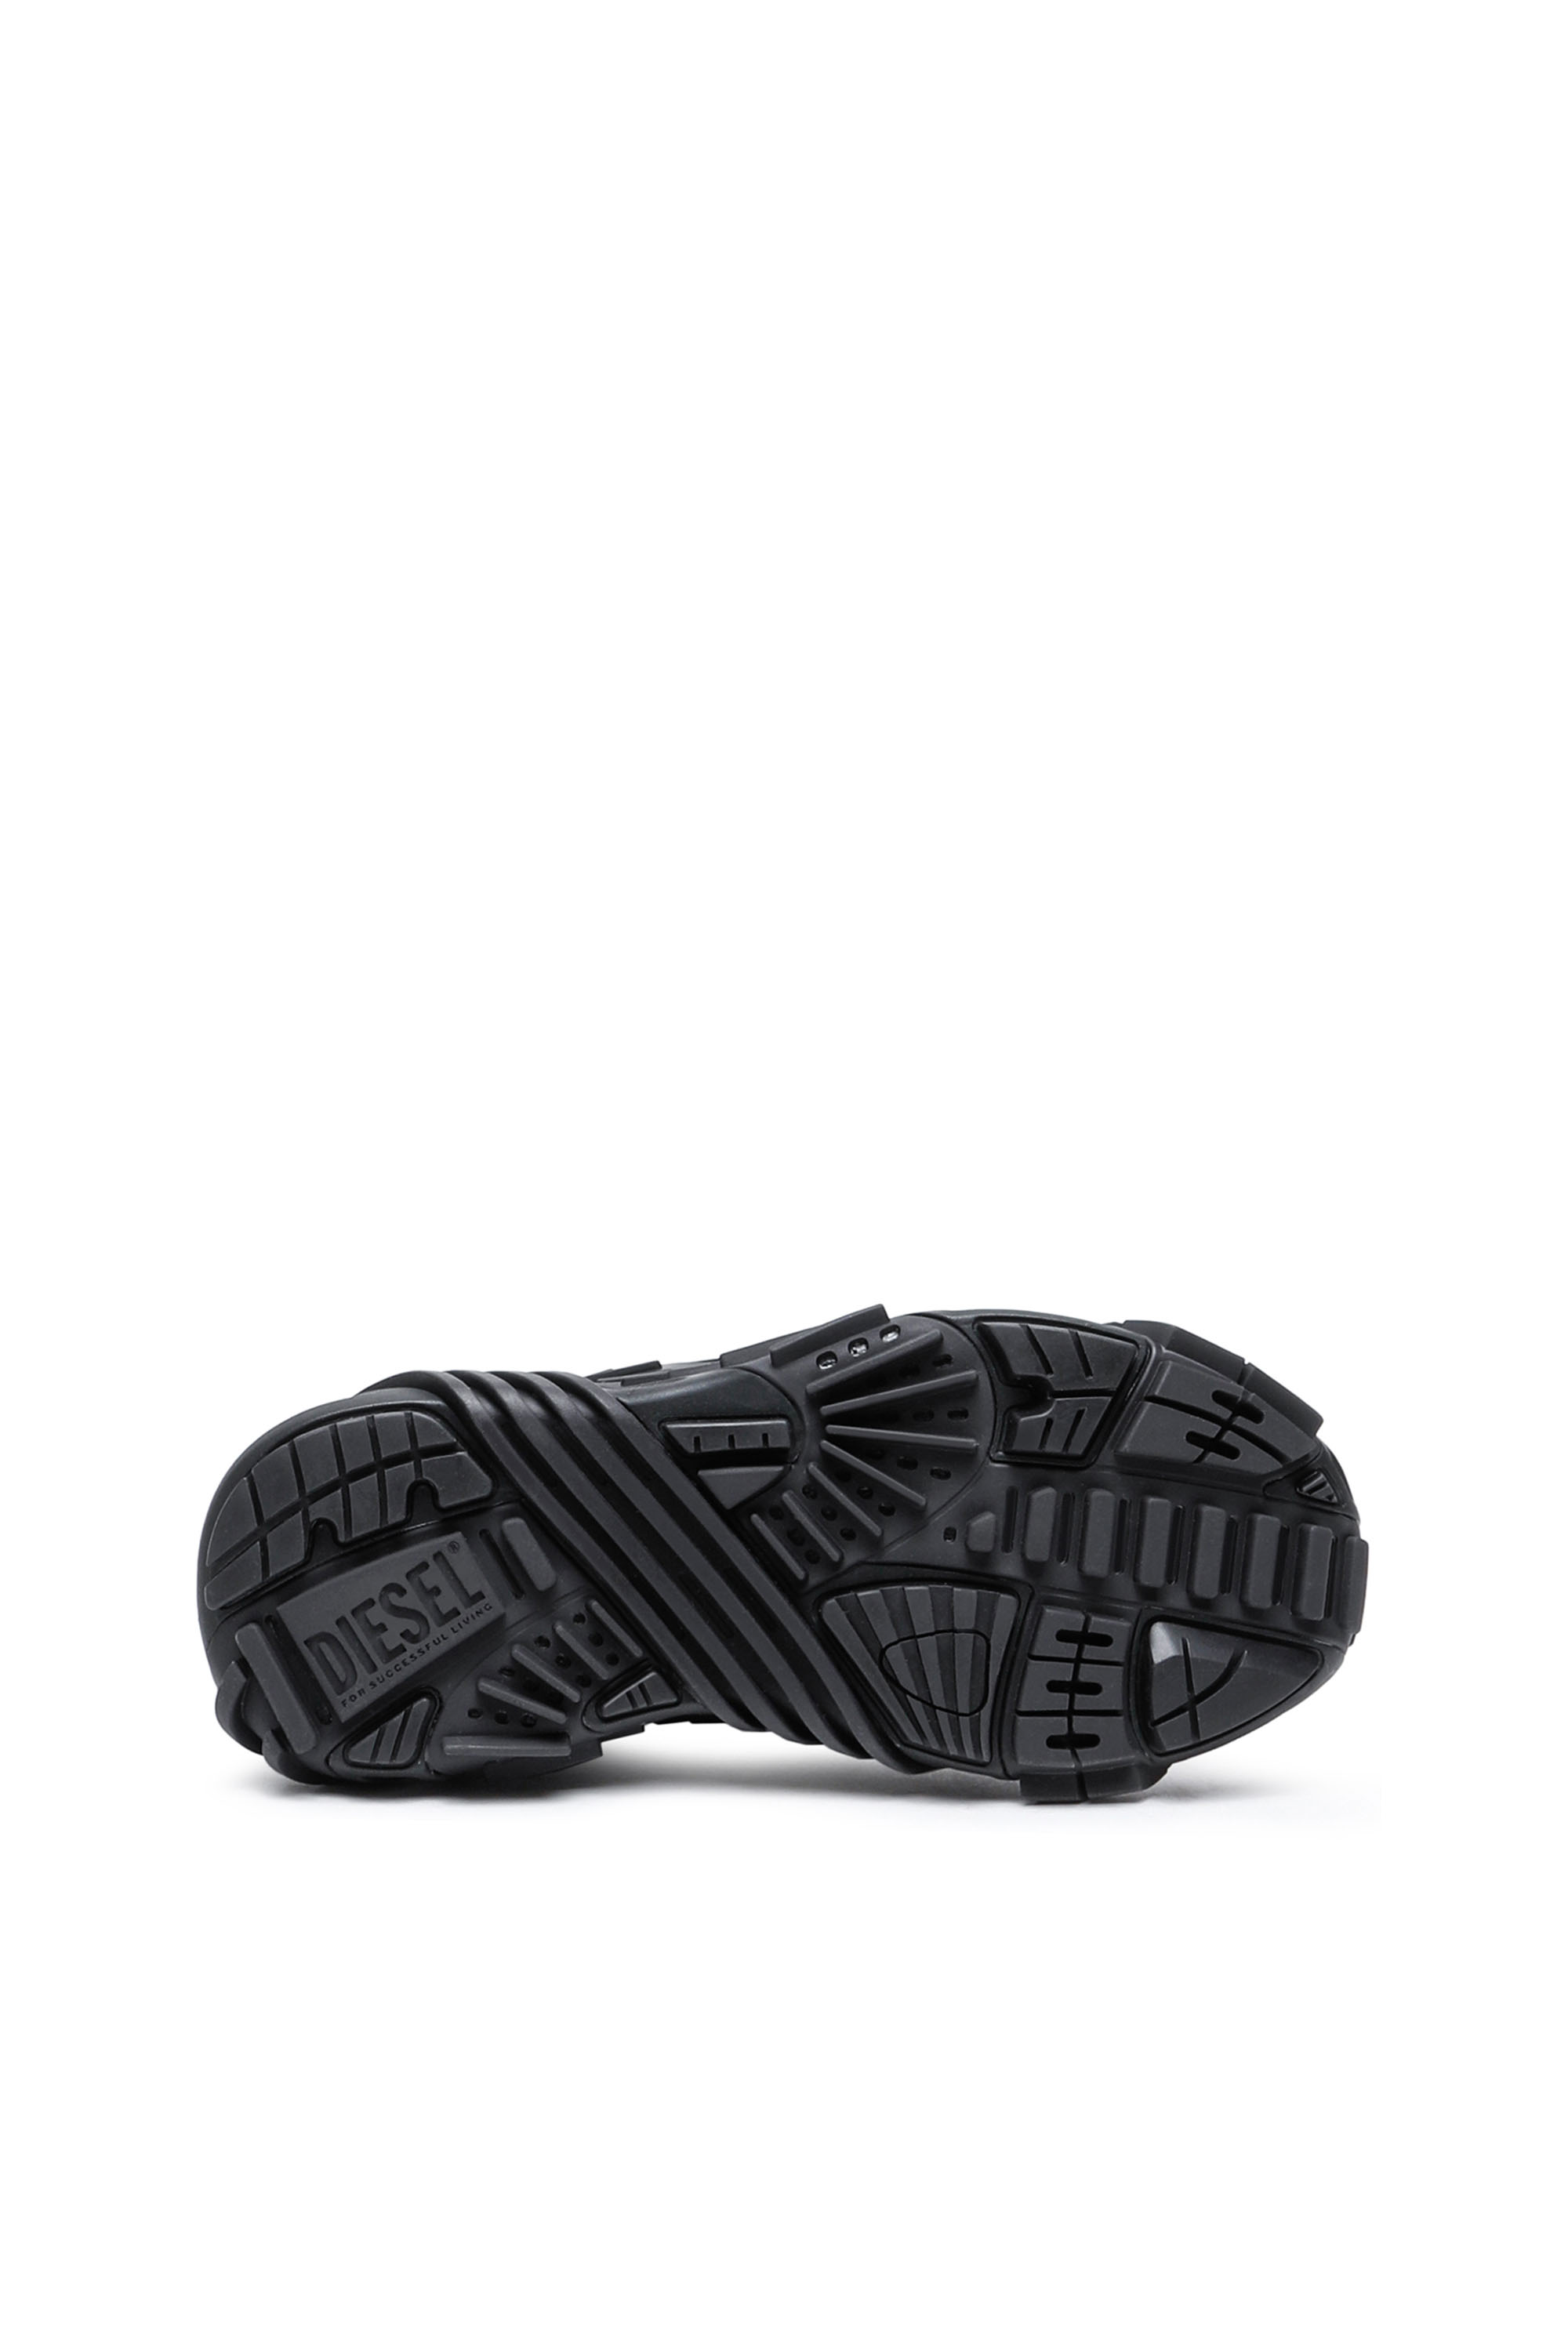 Diesel - S-PROTOTYPE LOW, Homme S-Prototype Low - Sneakers en mesh et caoutchouc in Noir - Image 6